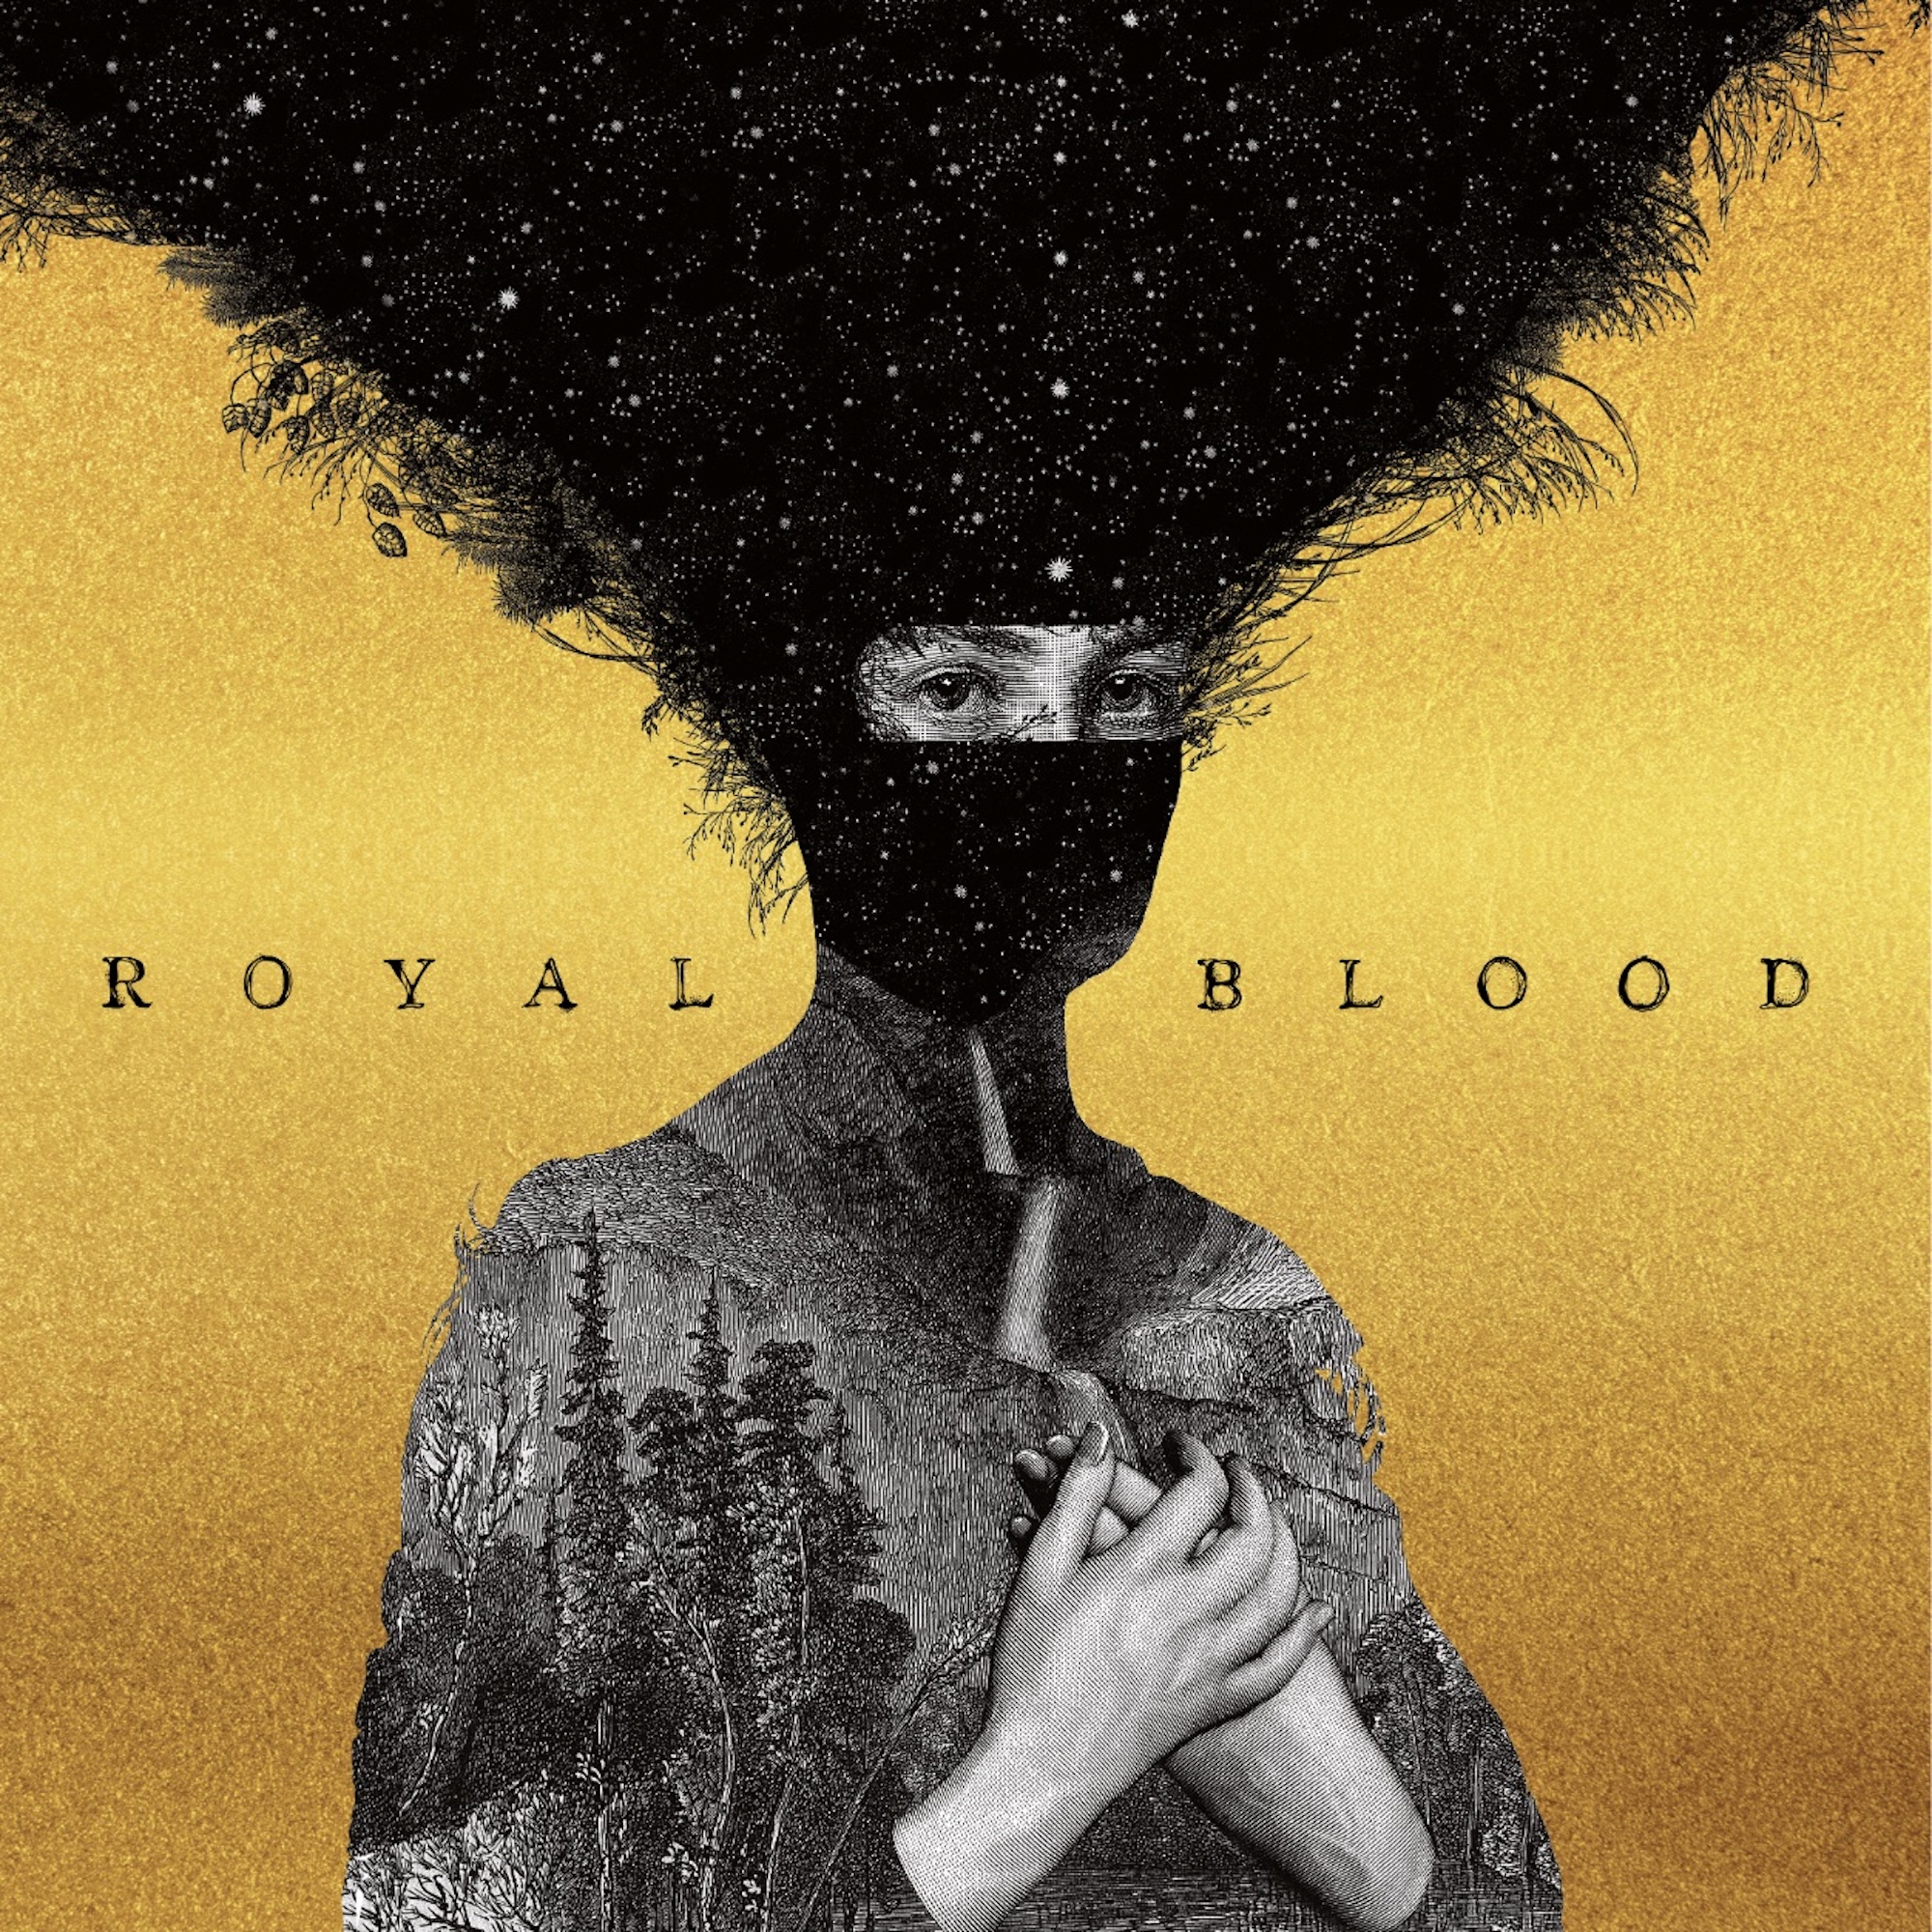 Royal Blood self-titled album artwork for 10th anniversary